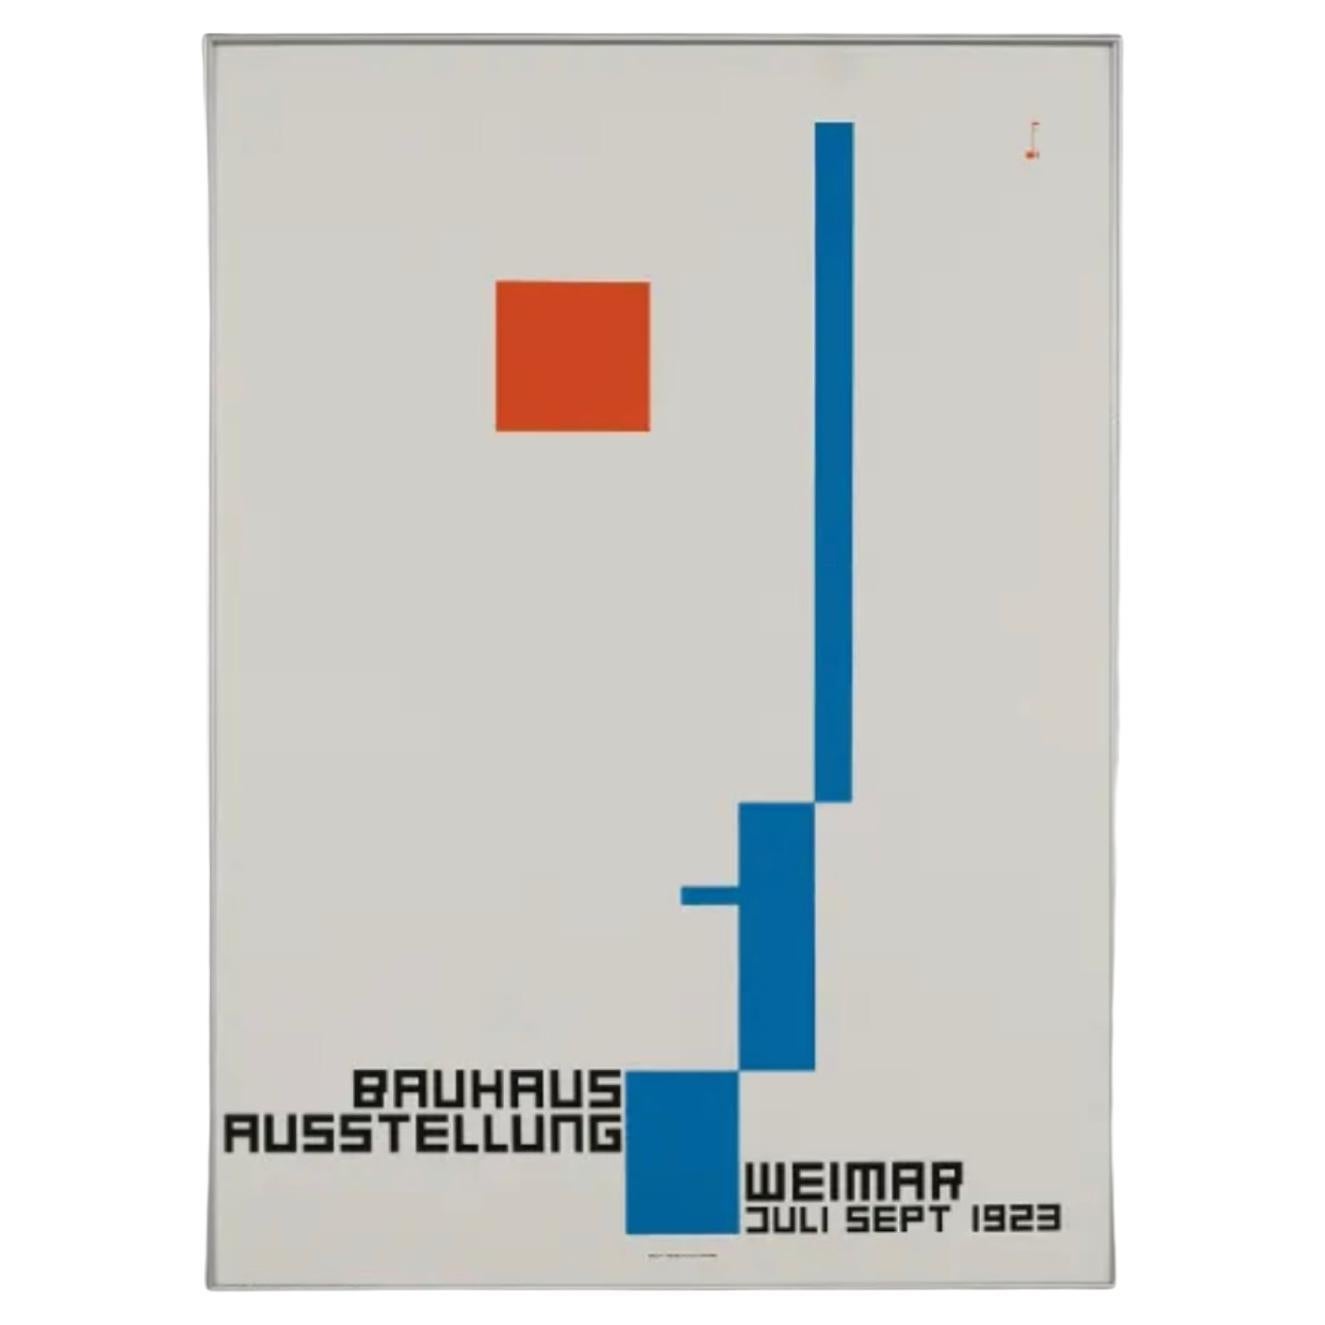 Fritz Schleifer, Bauhaus Ausstellung, 1923, Lithograph, Exhibition Print Weimar